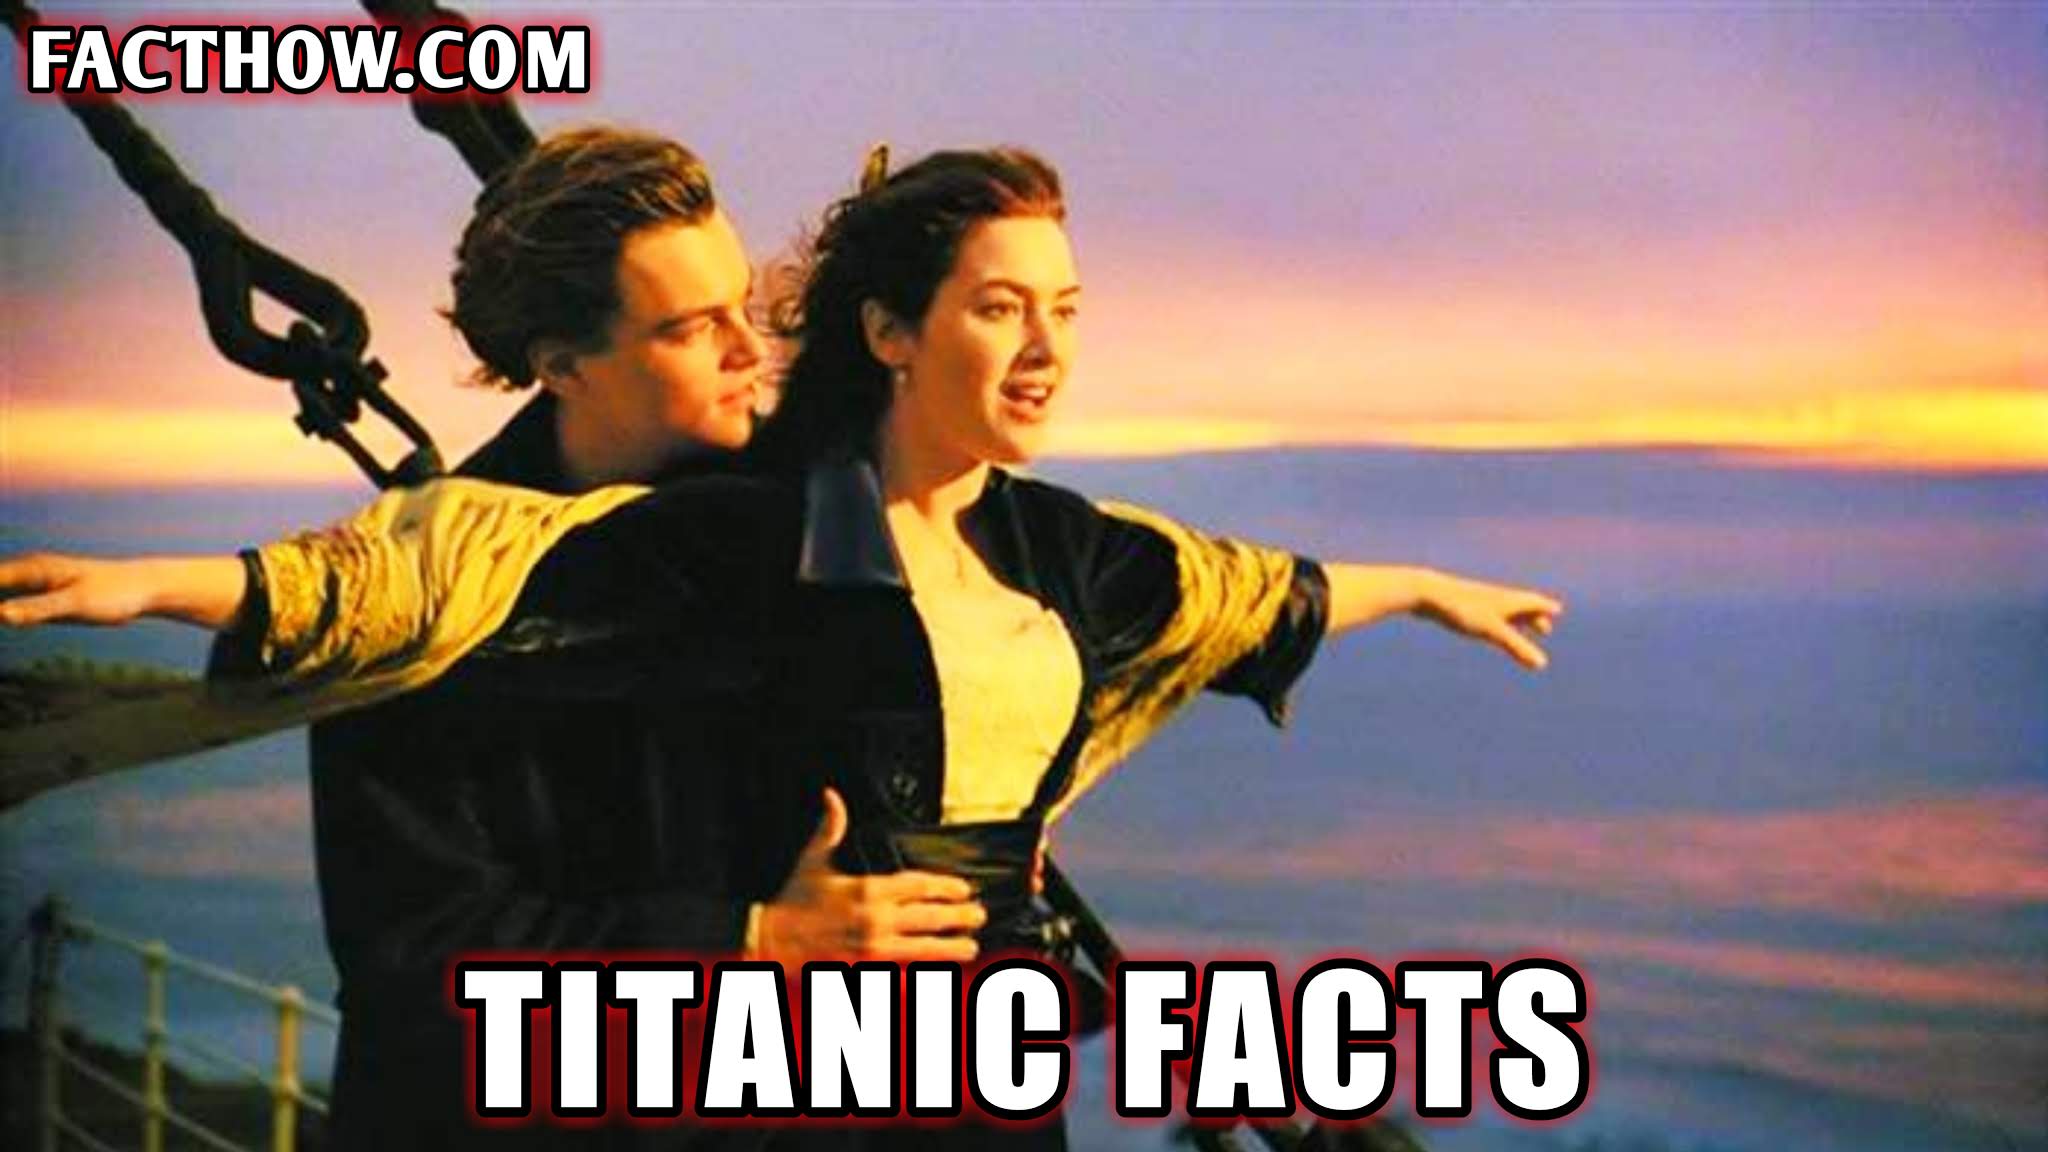 Interesting-facts-titanic-ship-titanic-movie-free-download-hd-hindi-1080p-download-openload-titanic-facts-hindi-interesting-amazing-facts-unknown-facts-hindi-titanic-facthow-fact-how-hindi-dubbed